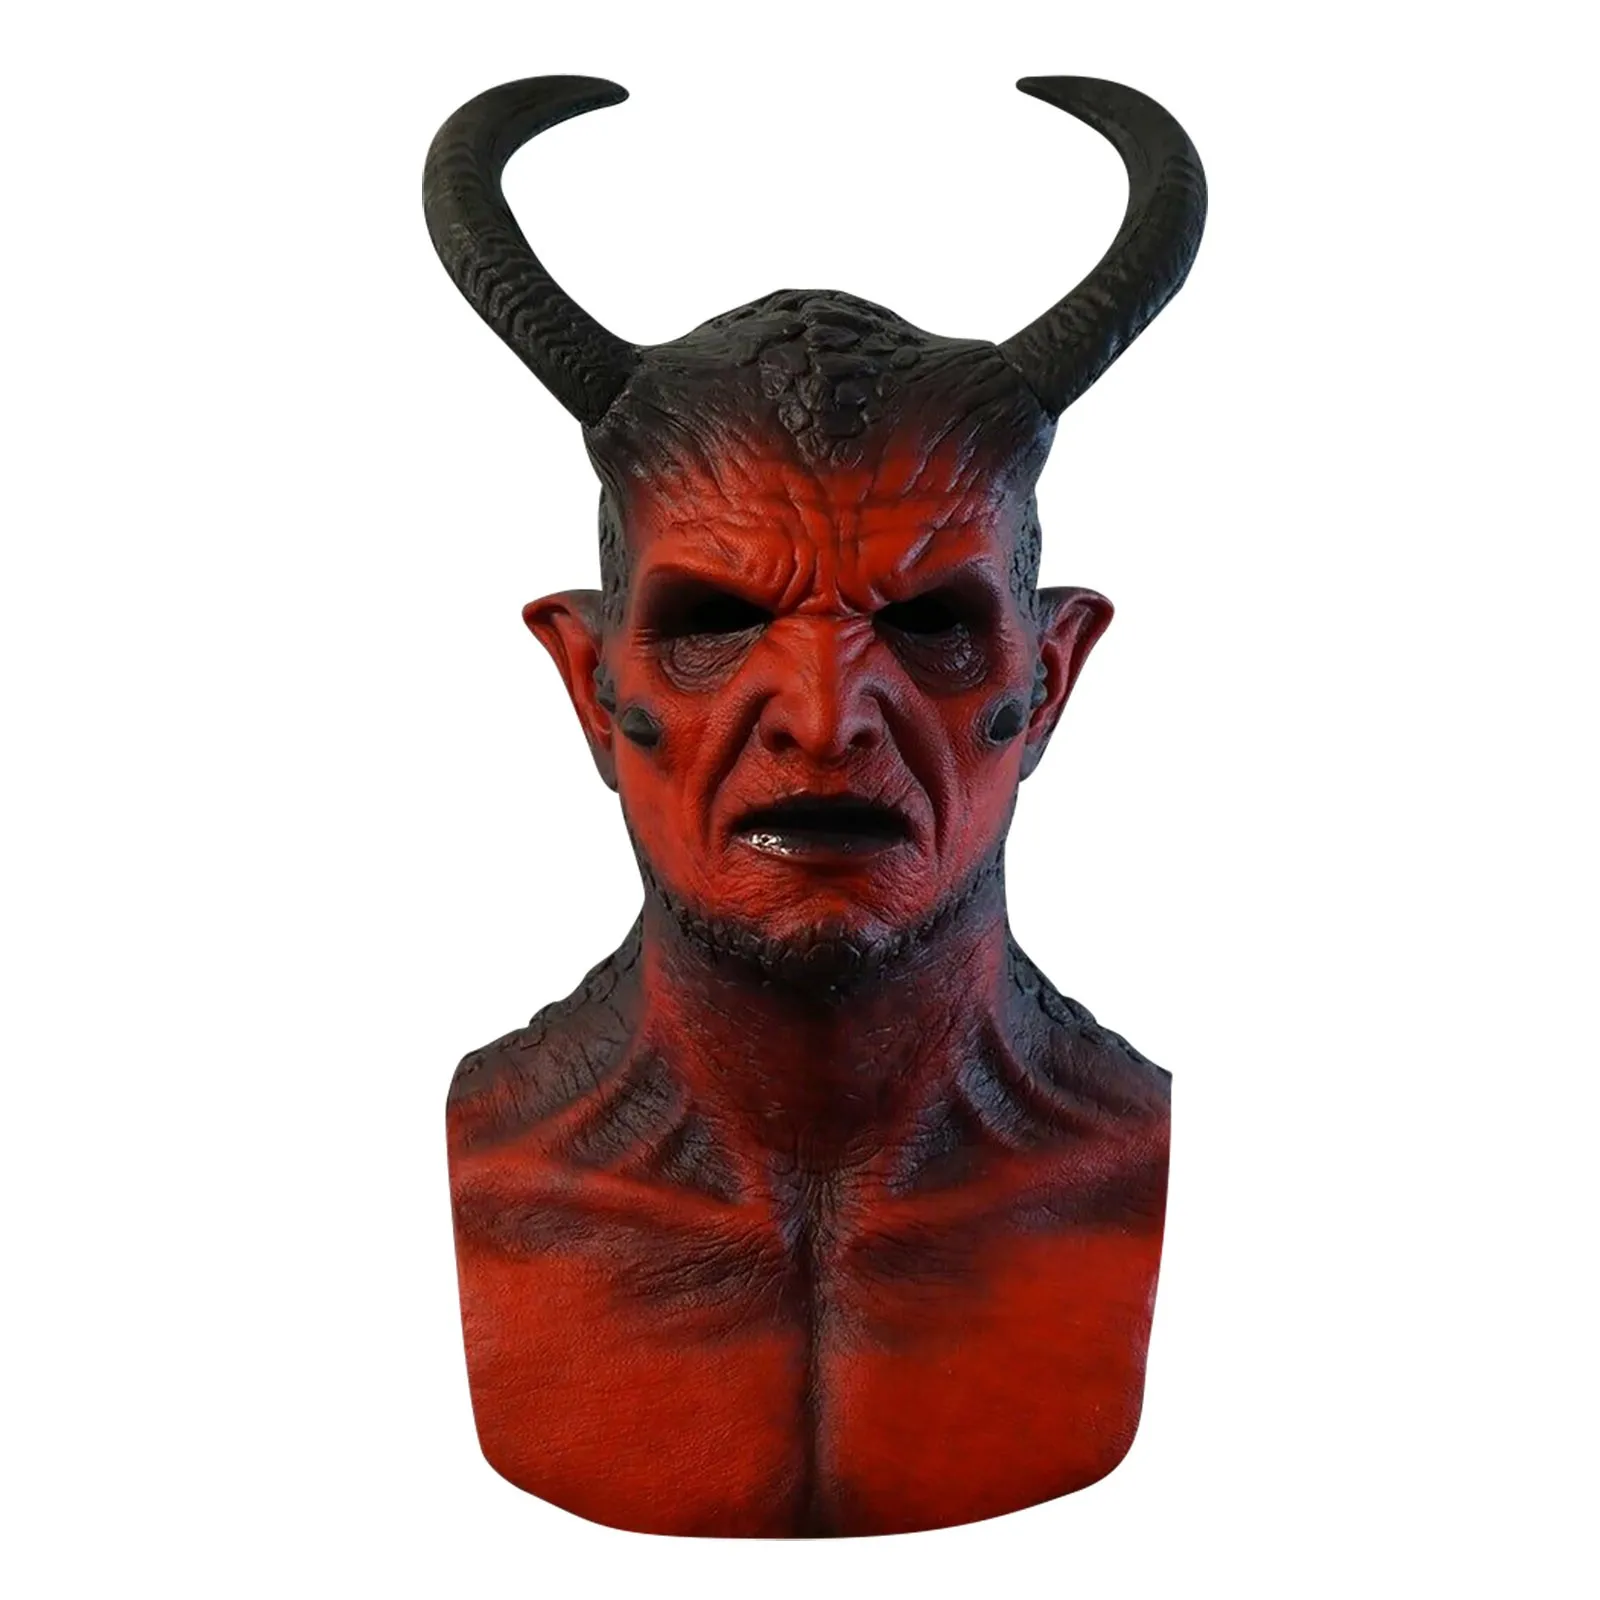 Ikari-Demon Latex маска дьявола реалистичный подарок для розыгрыша Хэллоуин Подарочная